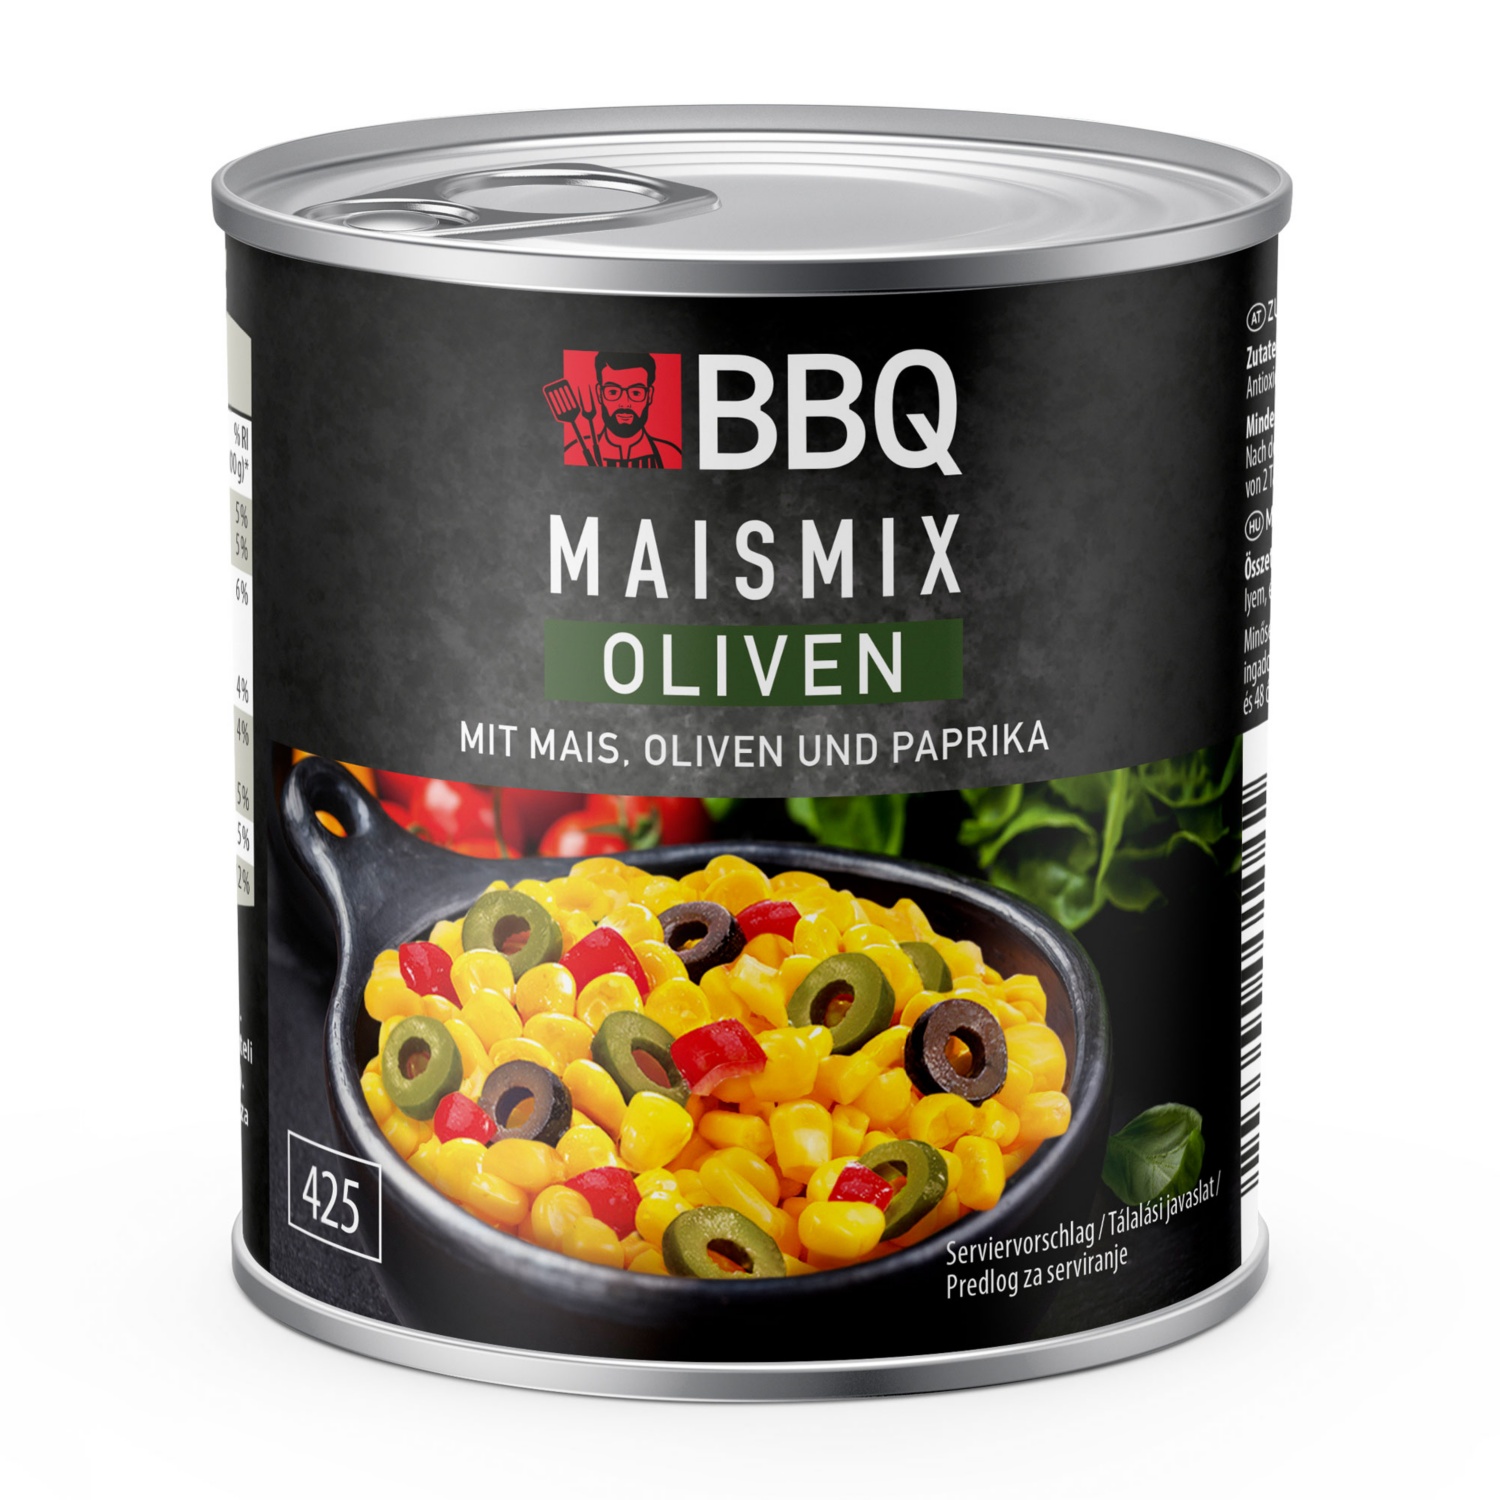 BBQ Mais Mix, Oliven